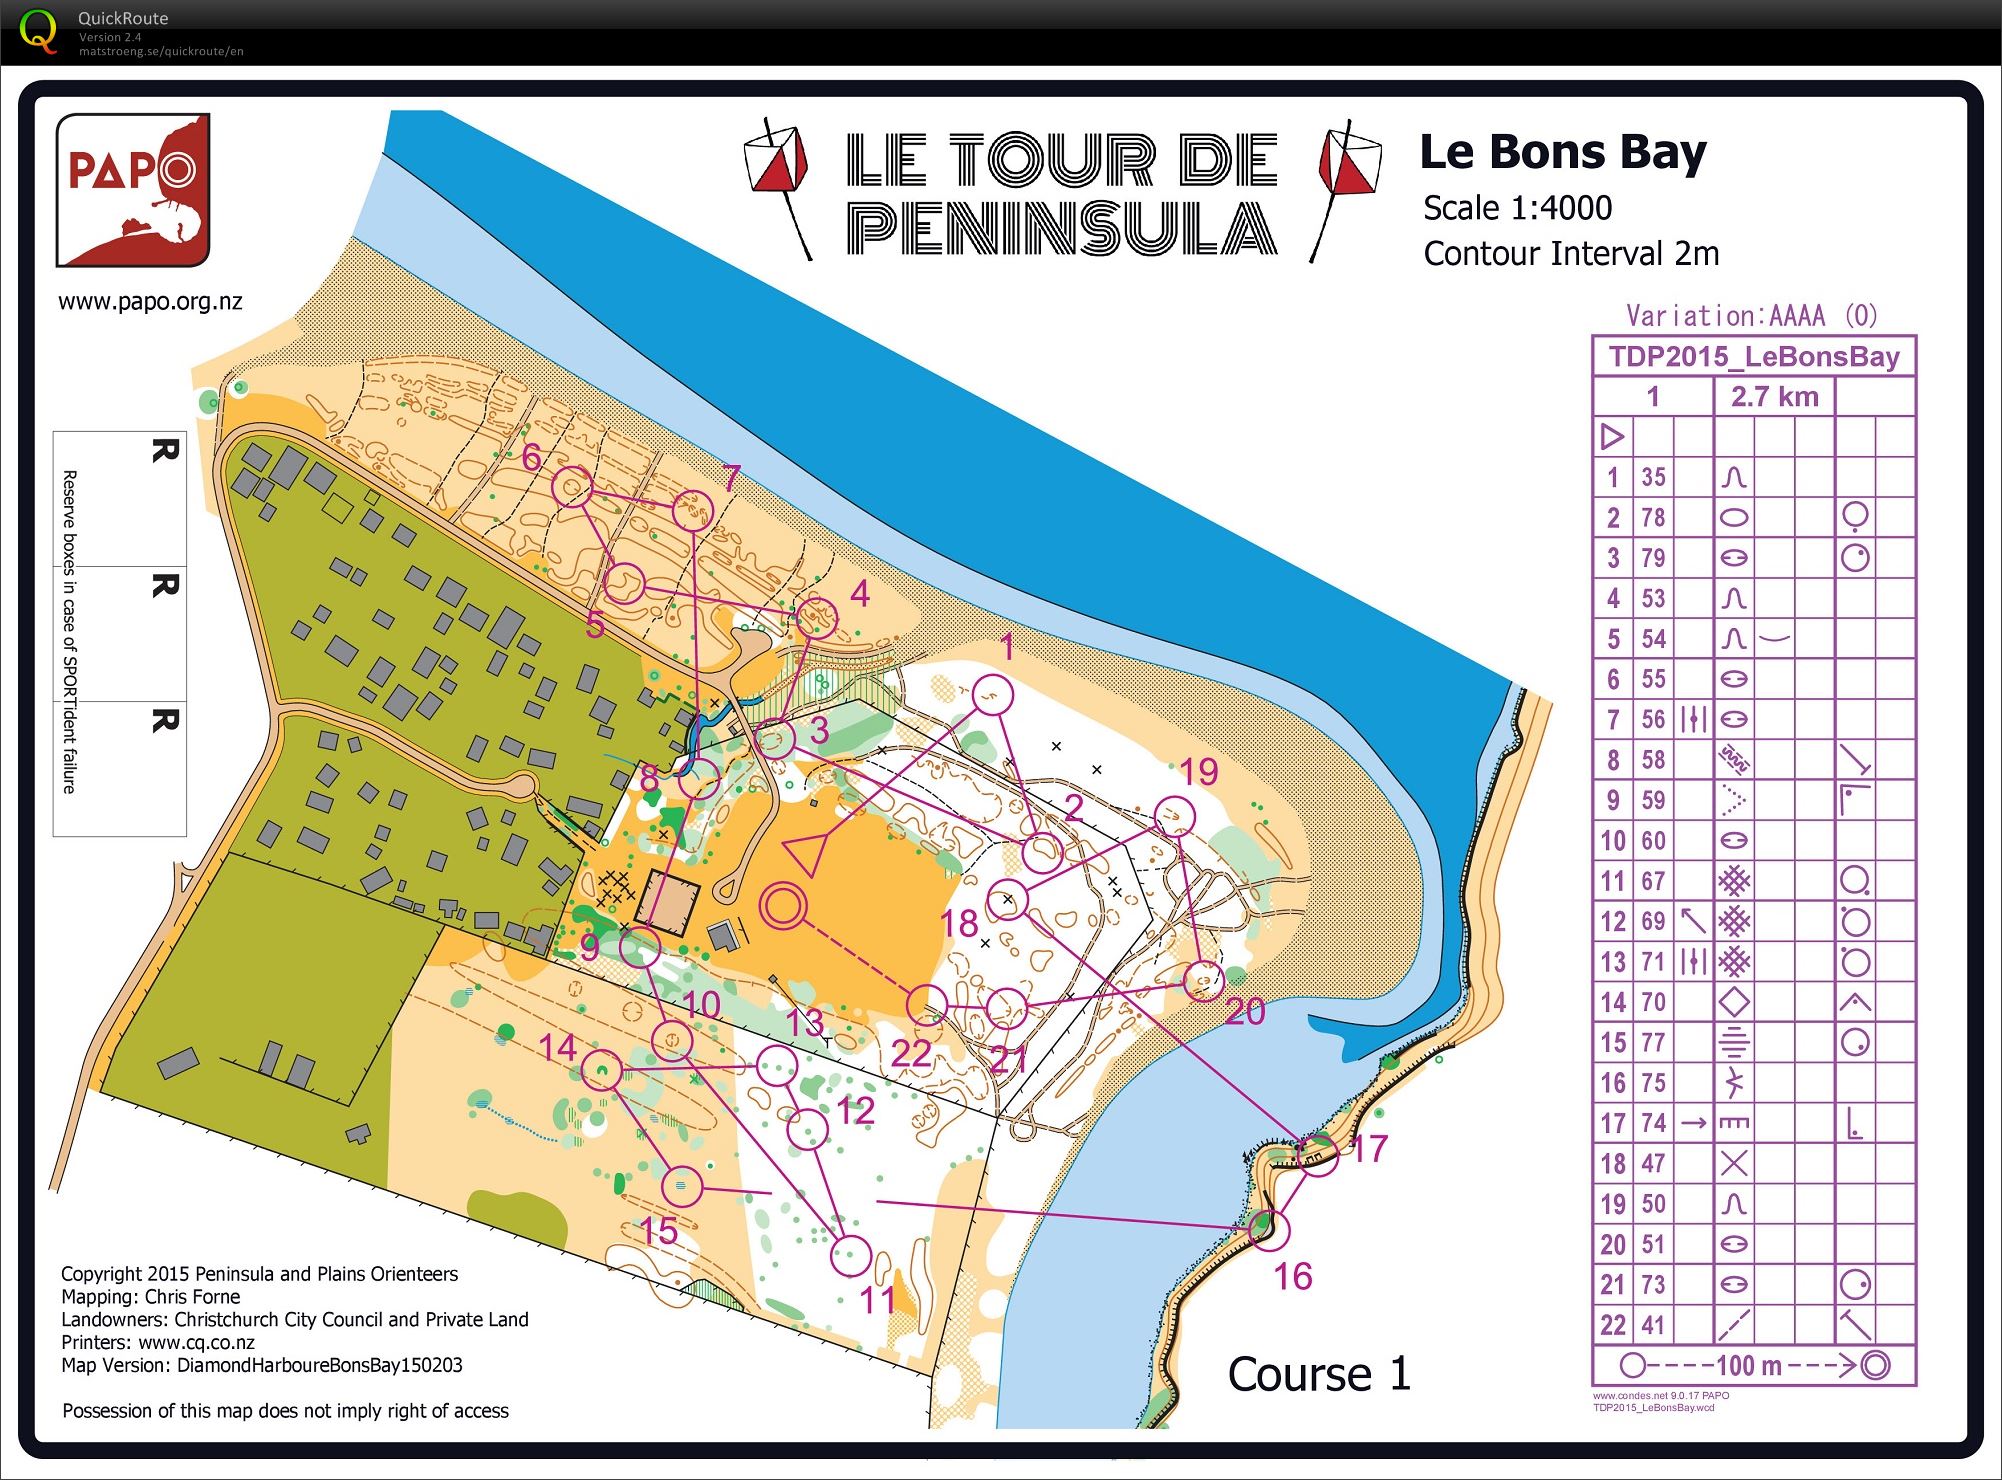 Tour De Peninsula Stage 6 (07.02.2015)